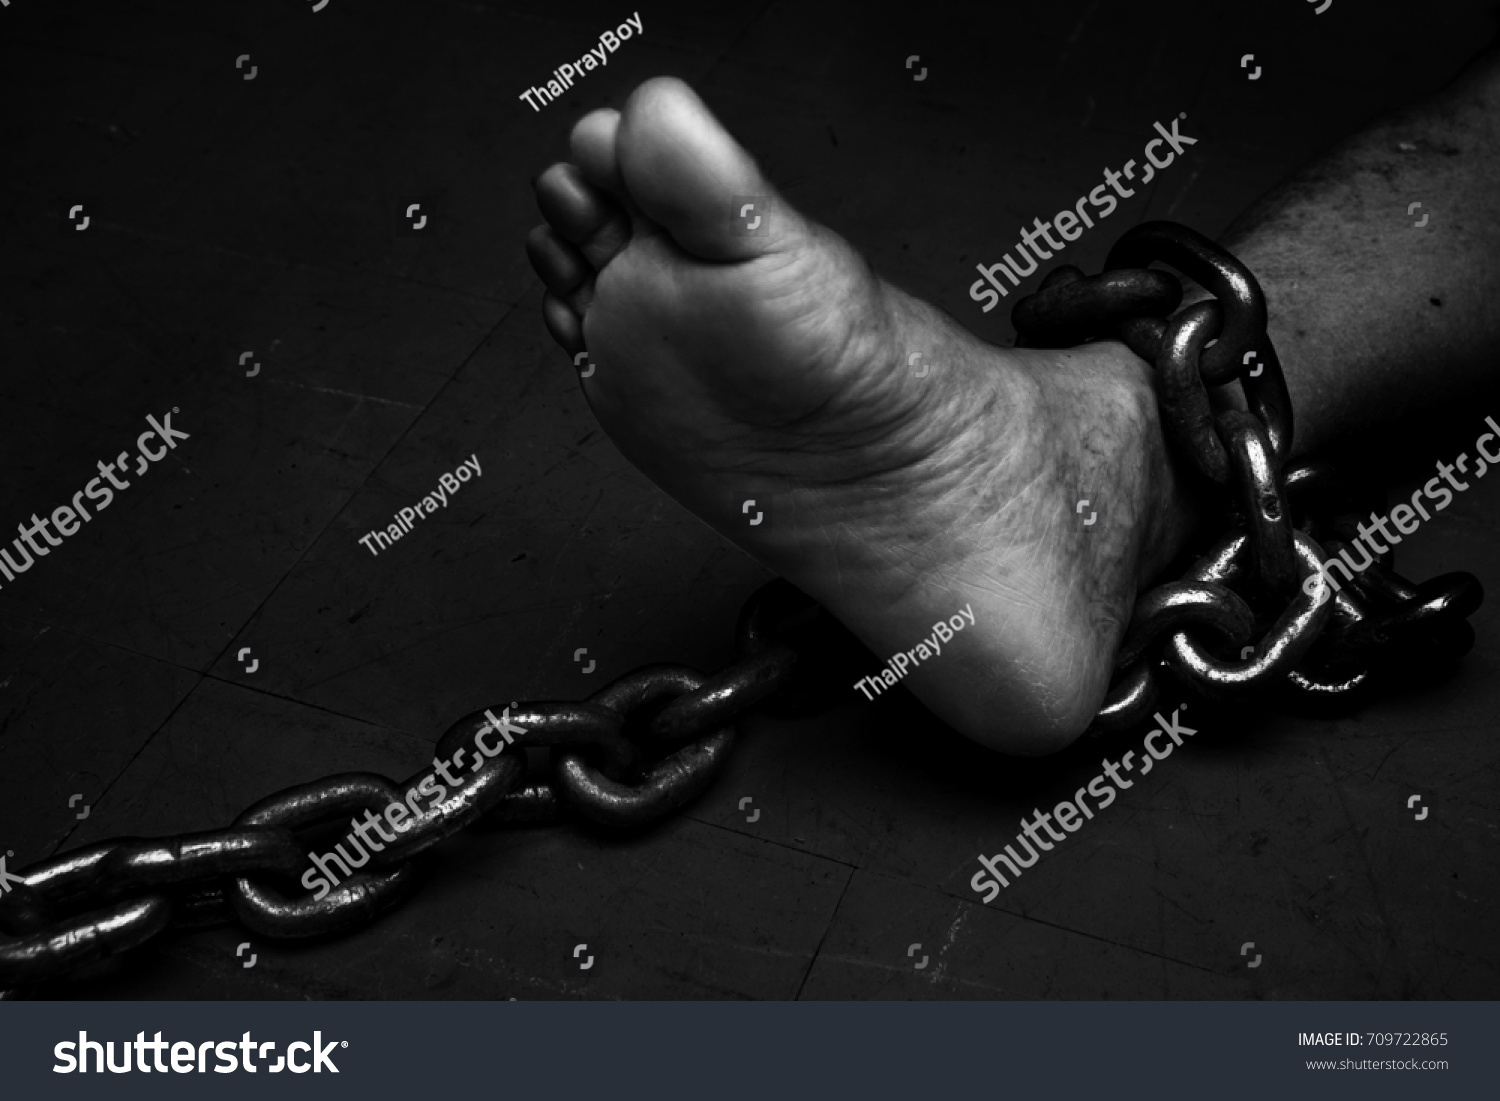 Prisoner slave hard dicks session